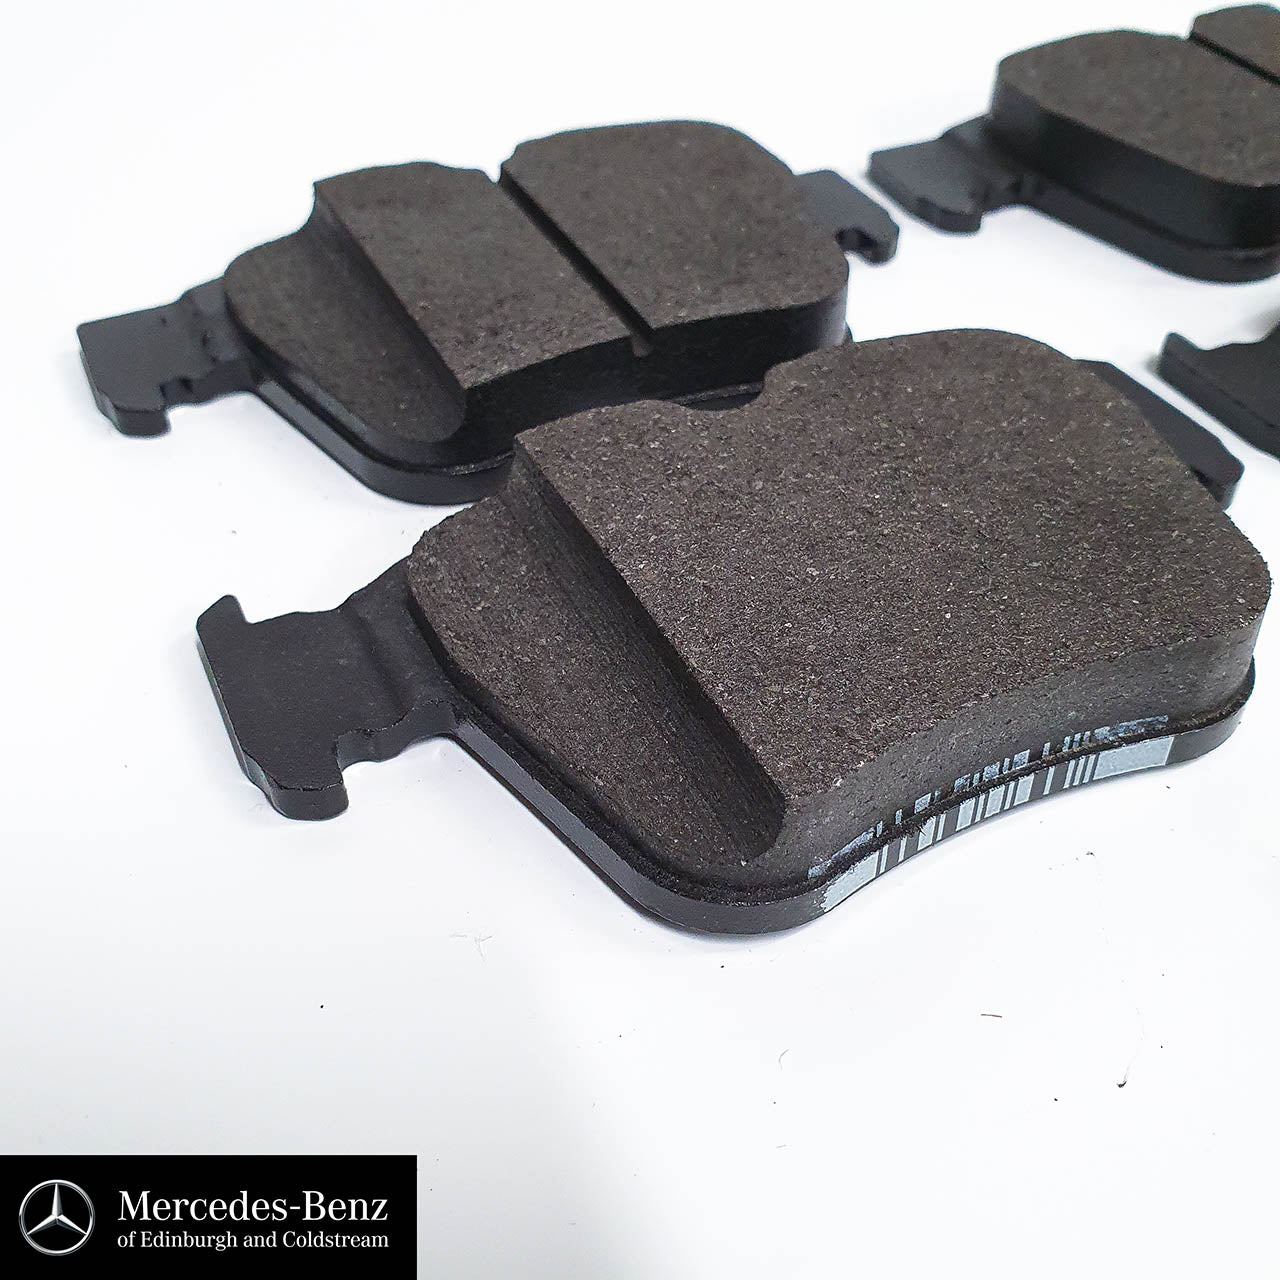 Genuine Mercedes-Benz brake pads & wear sensor - REAR - C Class, GLC